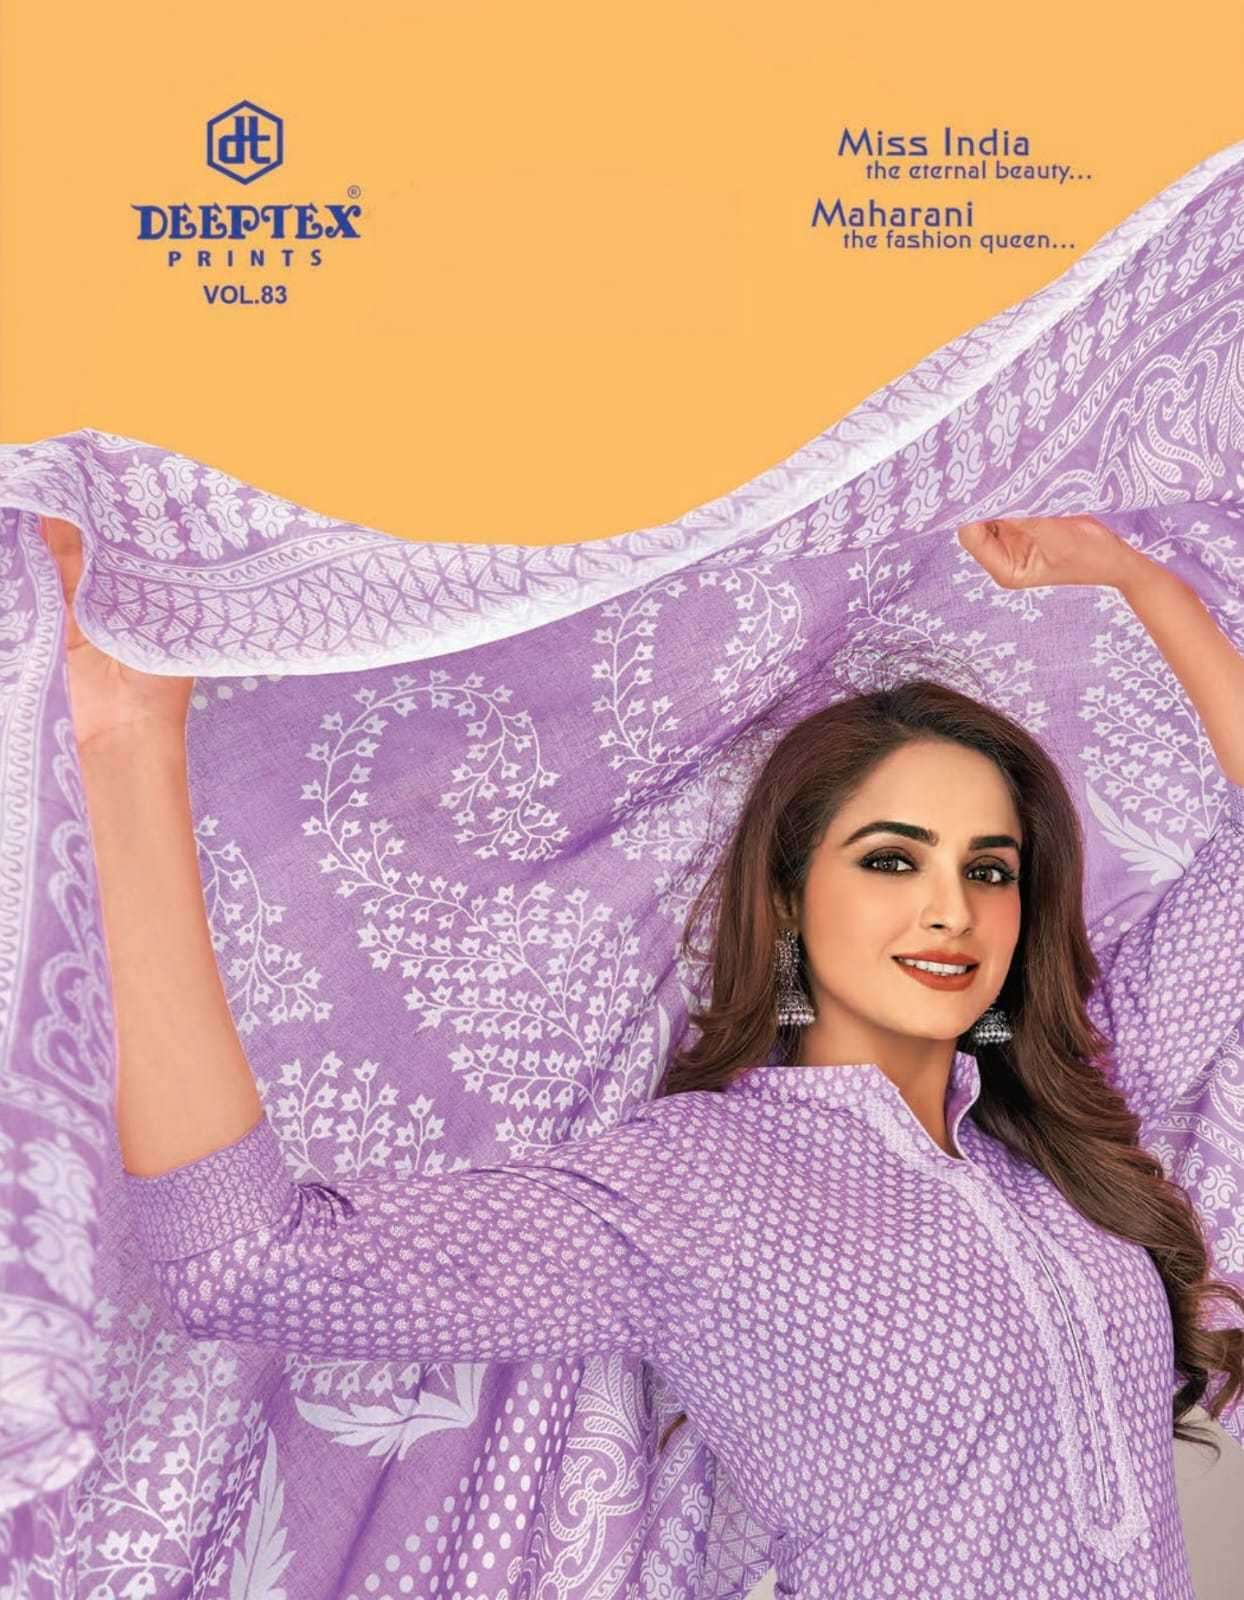 deeptex prints miss india vol 83 series 8301-8335 pure cotton suit 